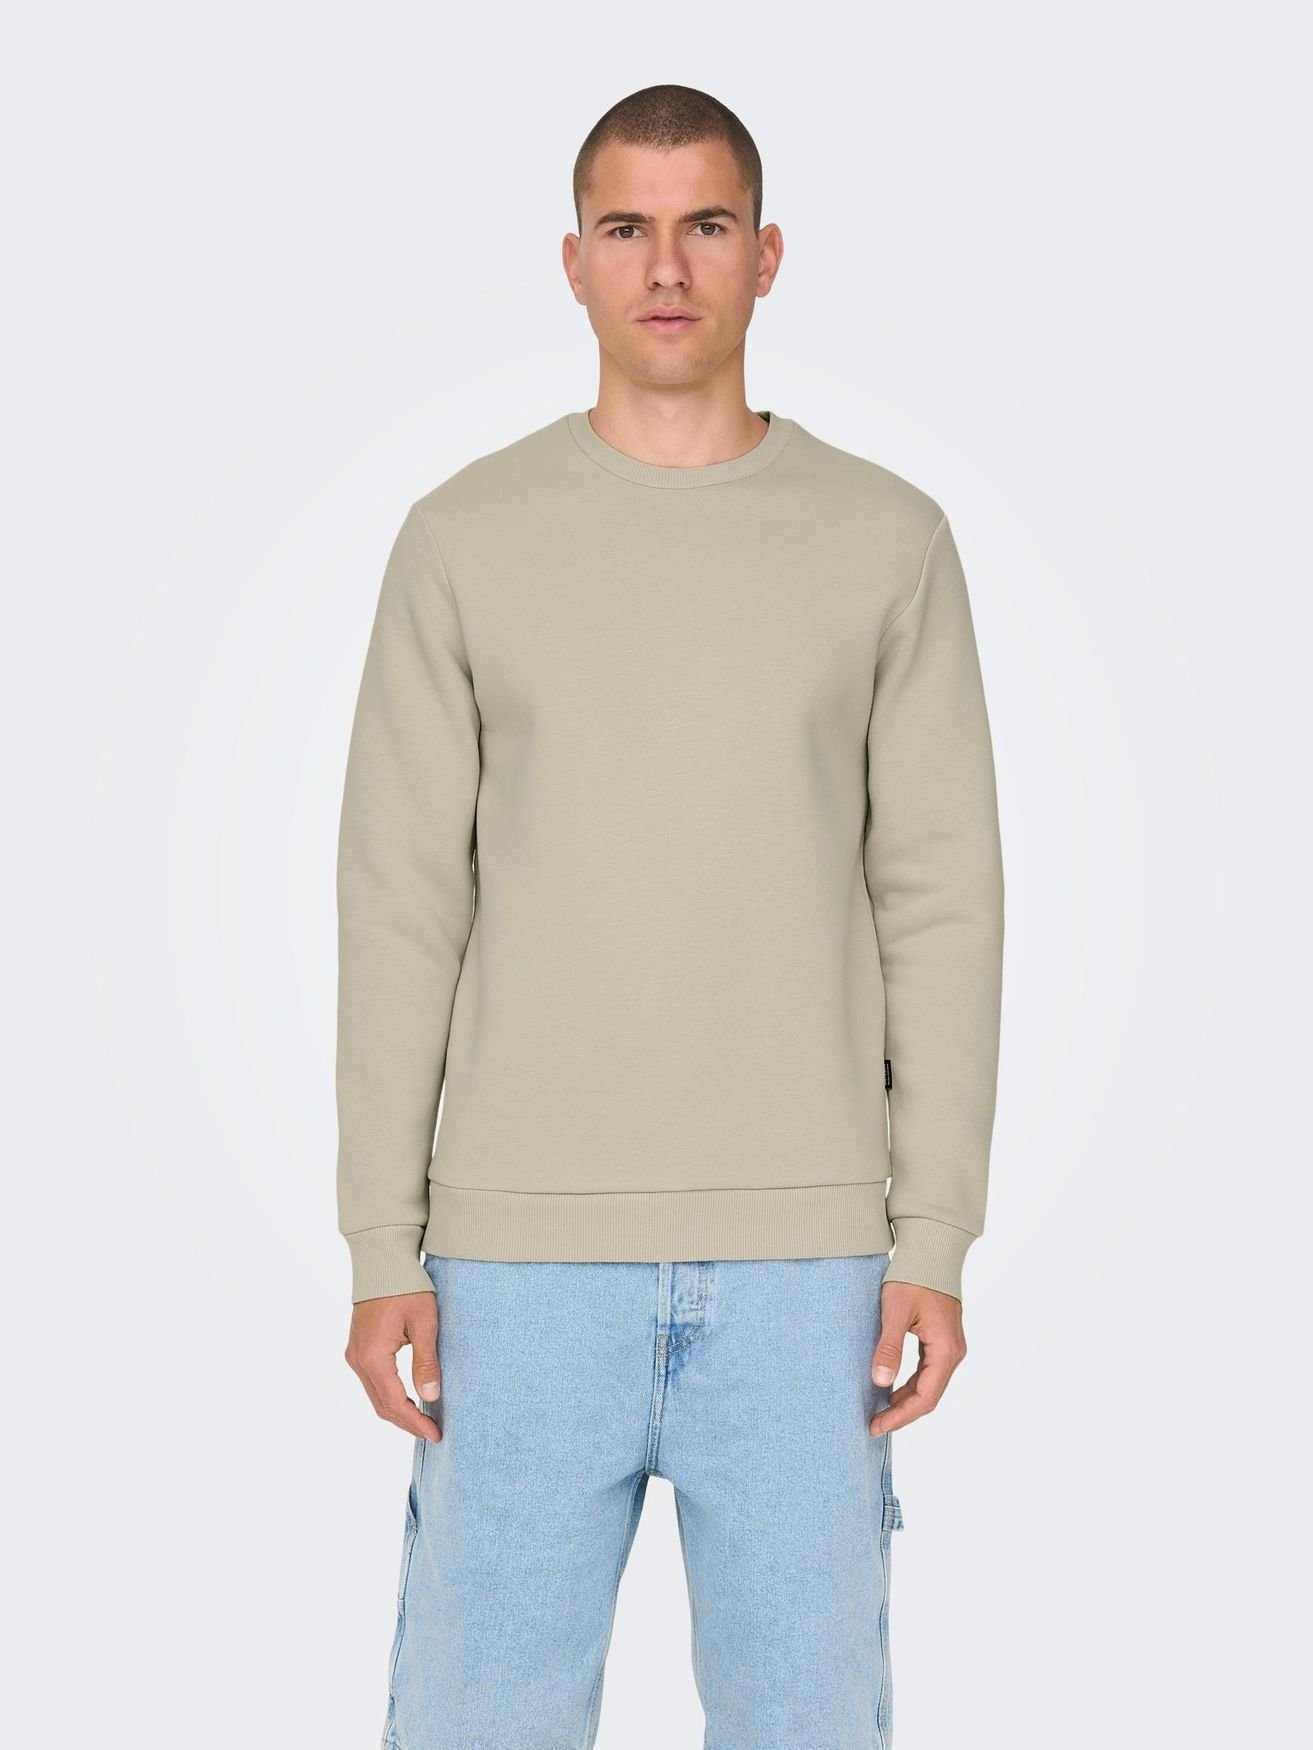 ONLY & SONS Langarm Sweatshirt ONSCERES in Basic Sweatshirt ohne Beige-2 Pullover 5428 Kapuze